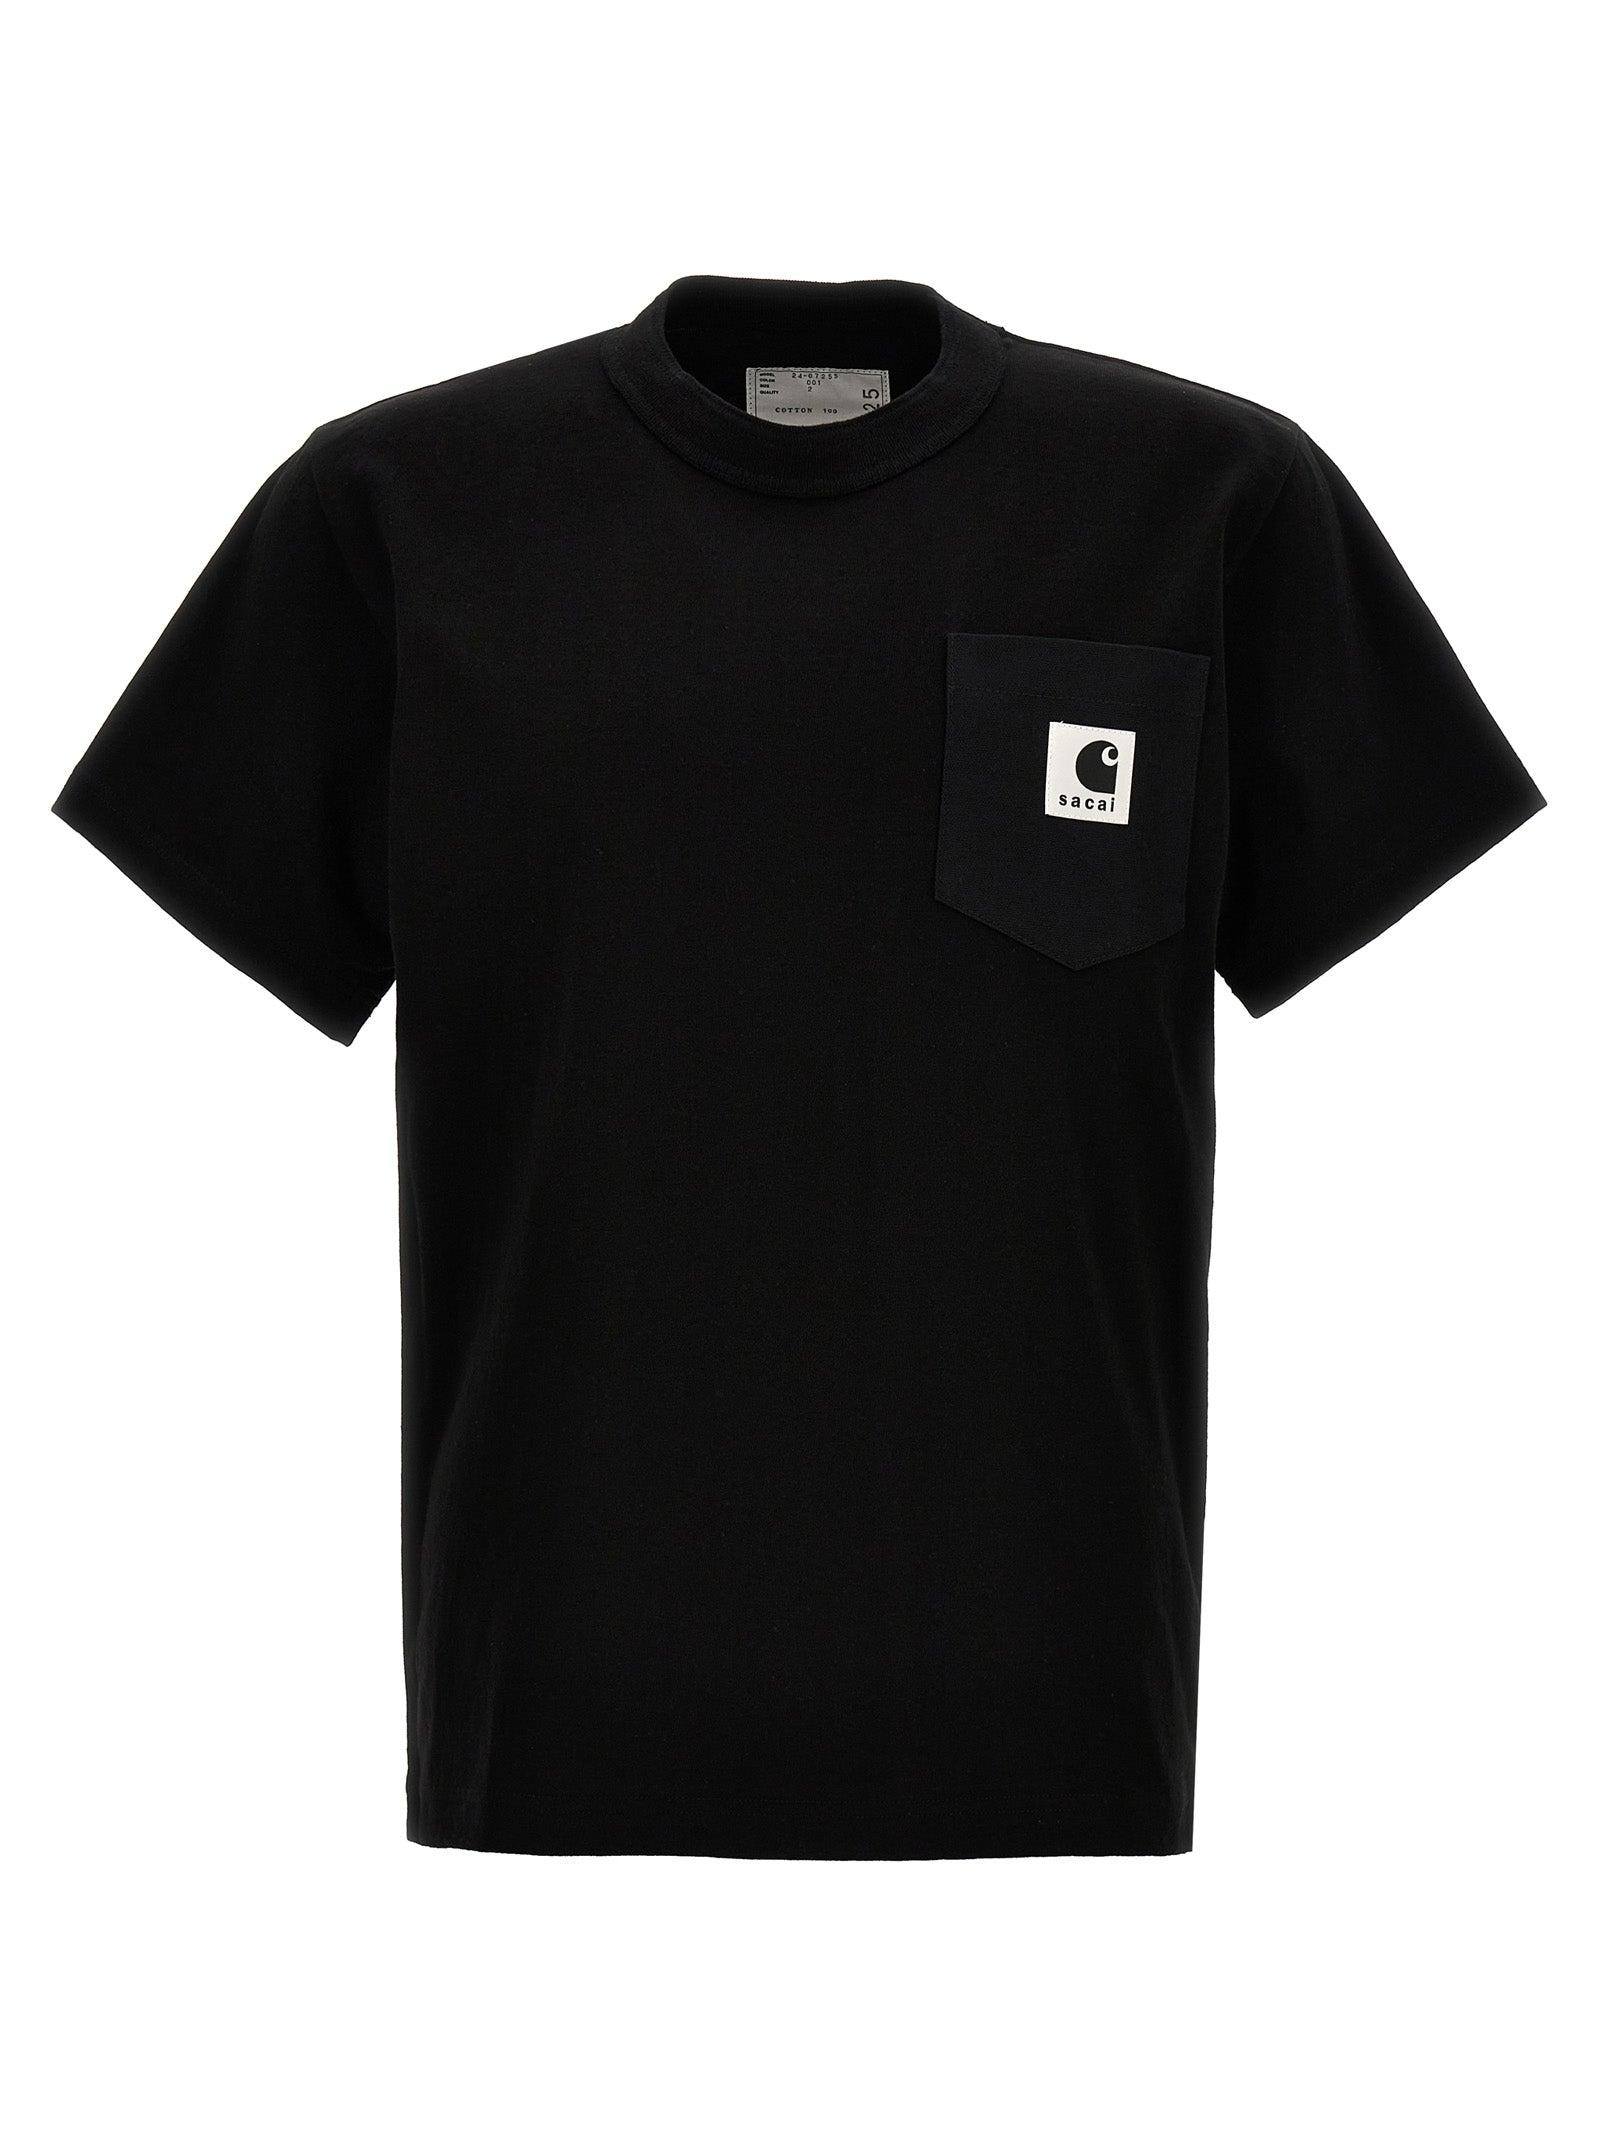 Sacai T-Shirt X Carhartt Wip in Black | Lyst